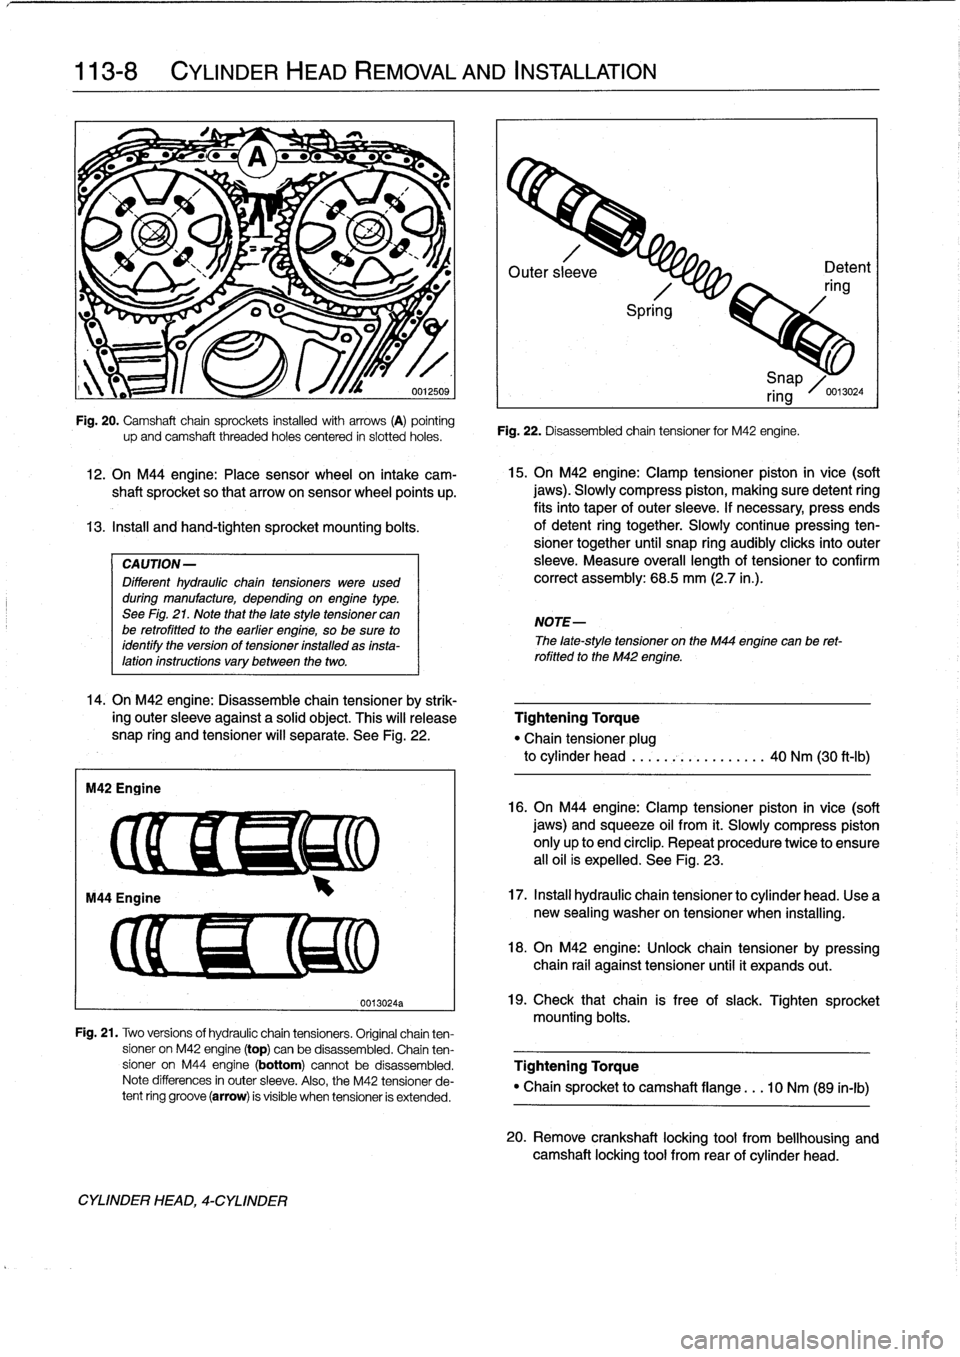 BMW 318i 1994 E36 Workshop Manual 
113-8

	

CYLINDER
HEAD
REMOVAL
AND
INSTALLATION

IW?
-
L
/~f
W

	

~
4r

"

-
"

	

;,s
1

12
.
On
M44
engine
:
Place
sensor
wheel
on
intake
cam-
shaft
sprocket
so
that
arrowon
sensor
wheel
points
